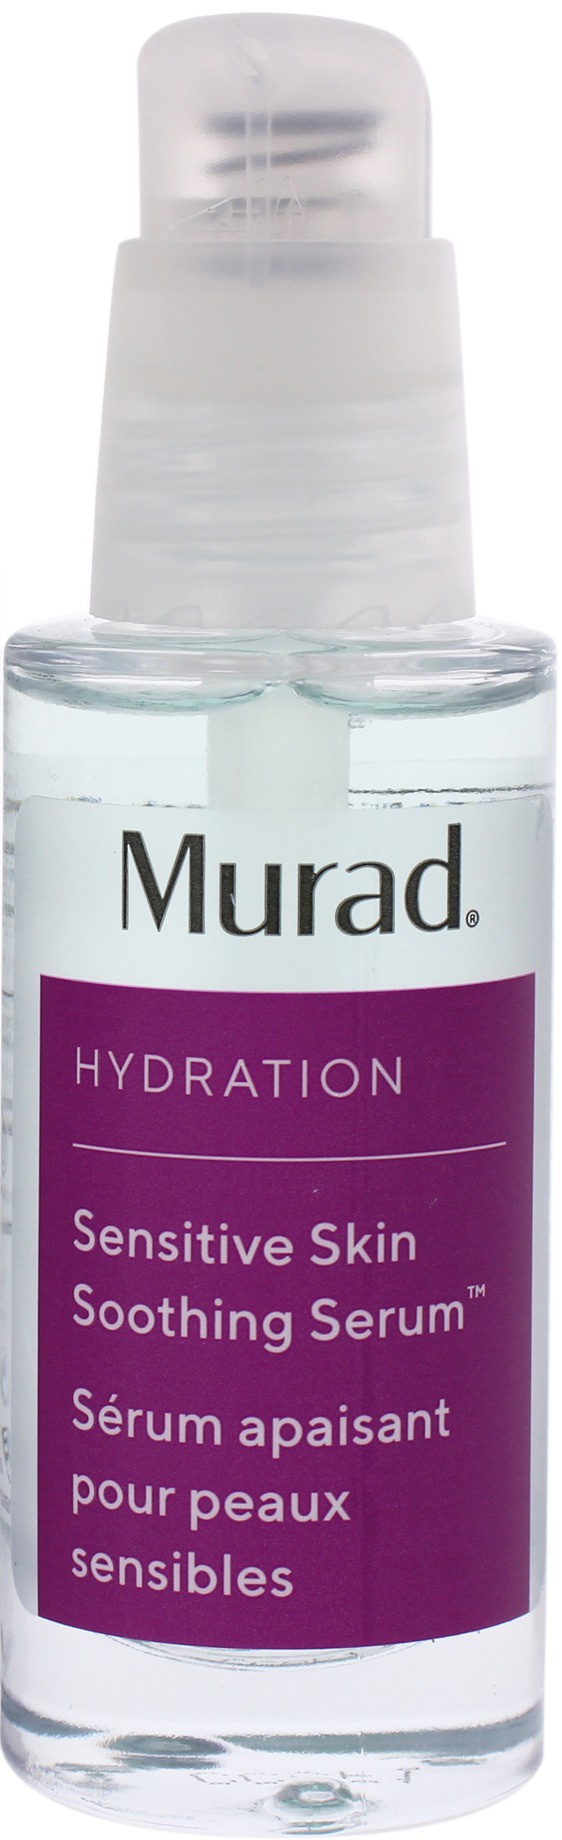 Murad Hydration | Sensitive Skin Soothing Serum